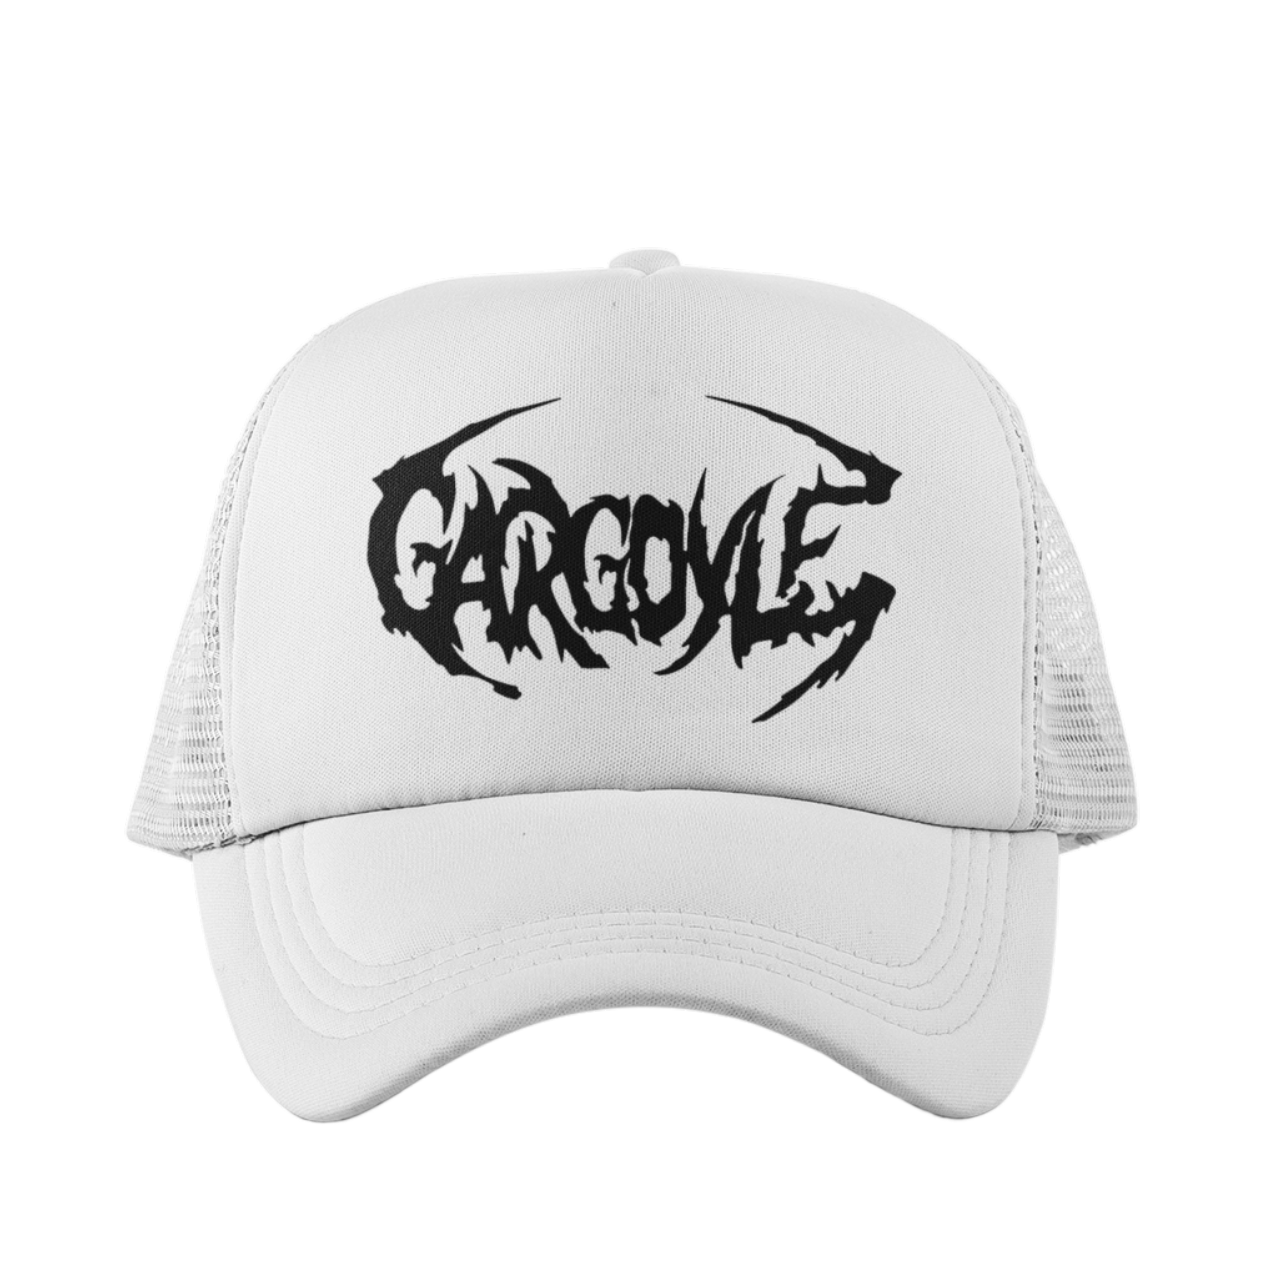 Organik Lyfestyle - Gargoyle G.A.N.G - White & Black Hat